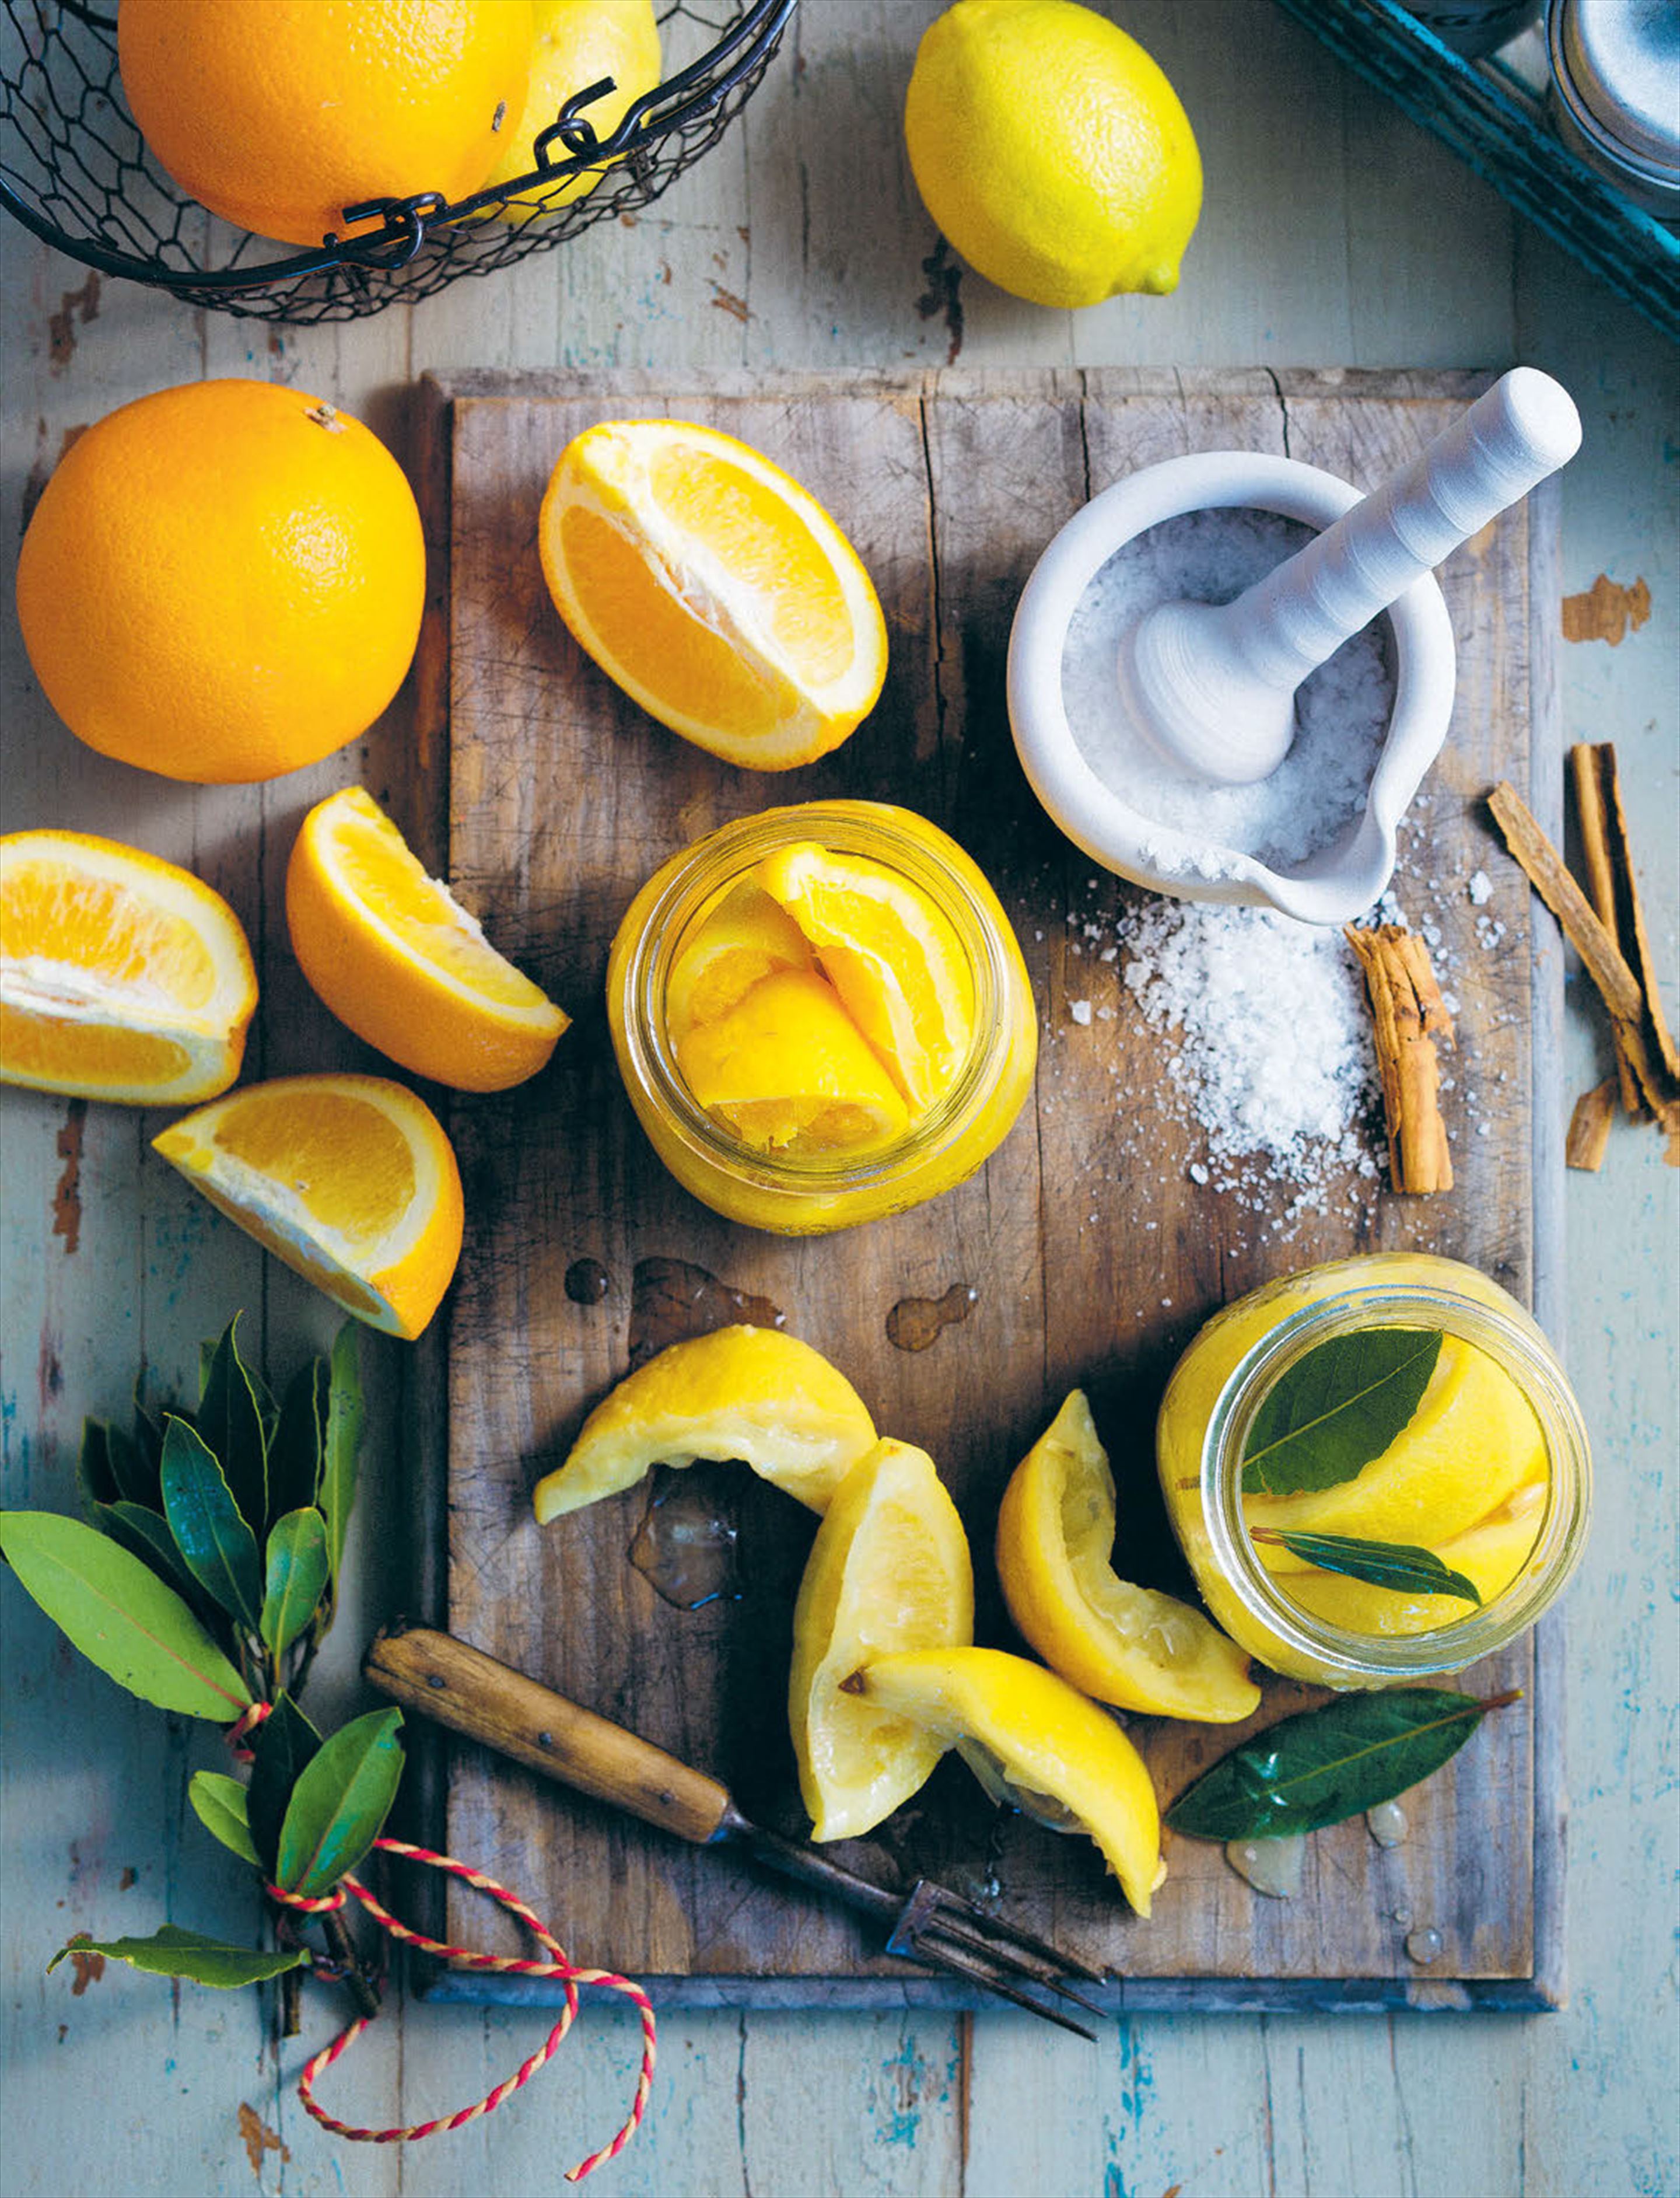 Preserved lemons or oranges